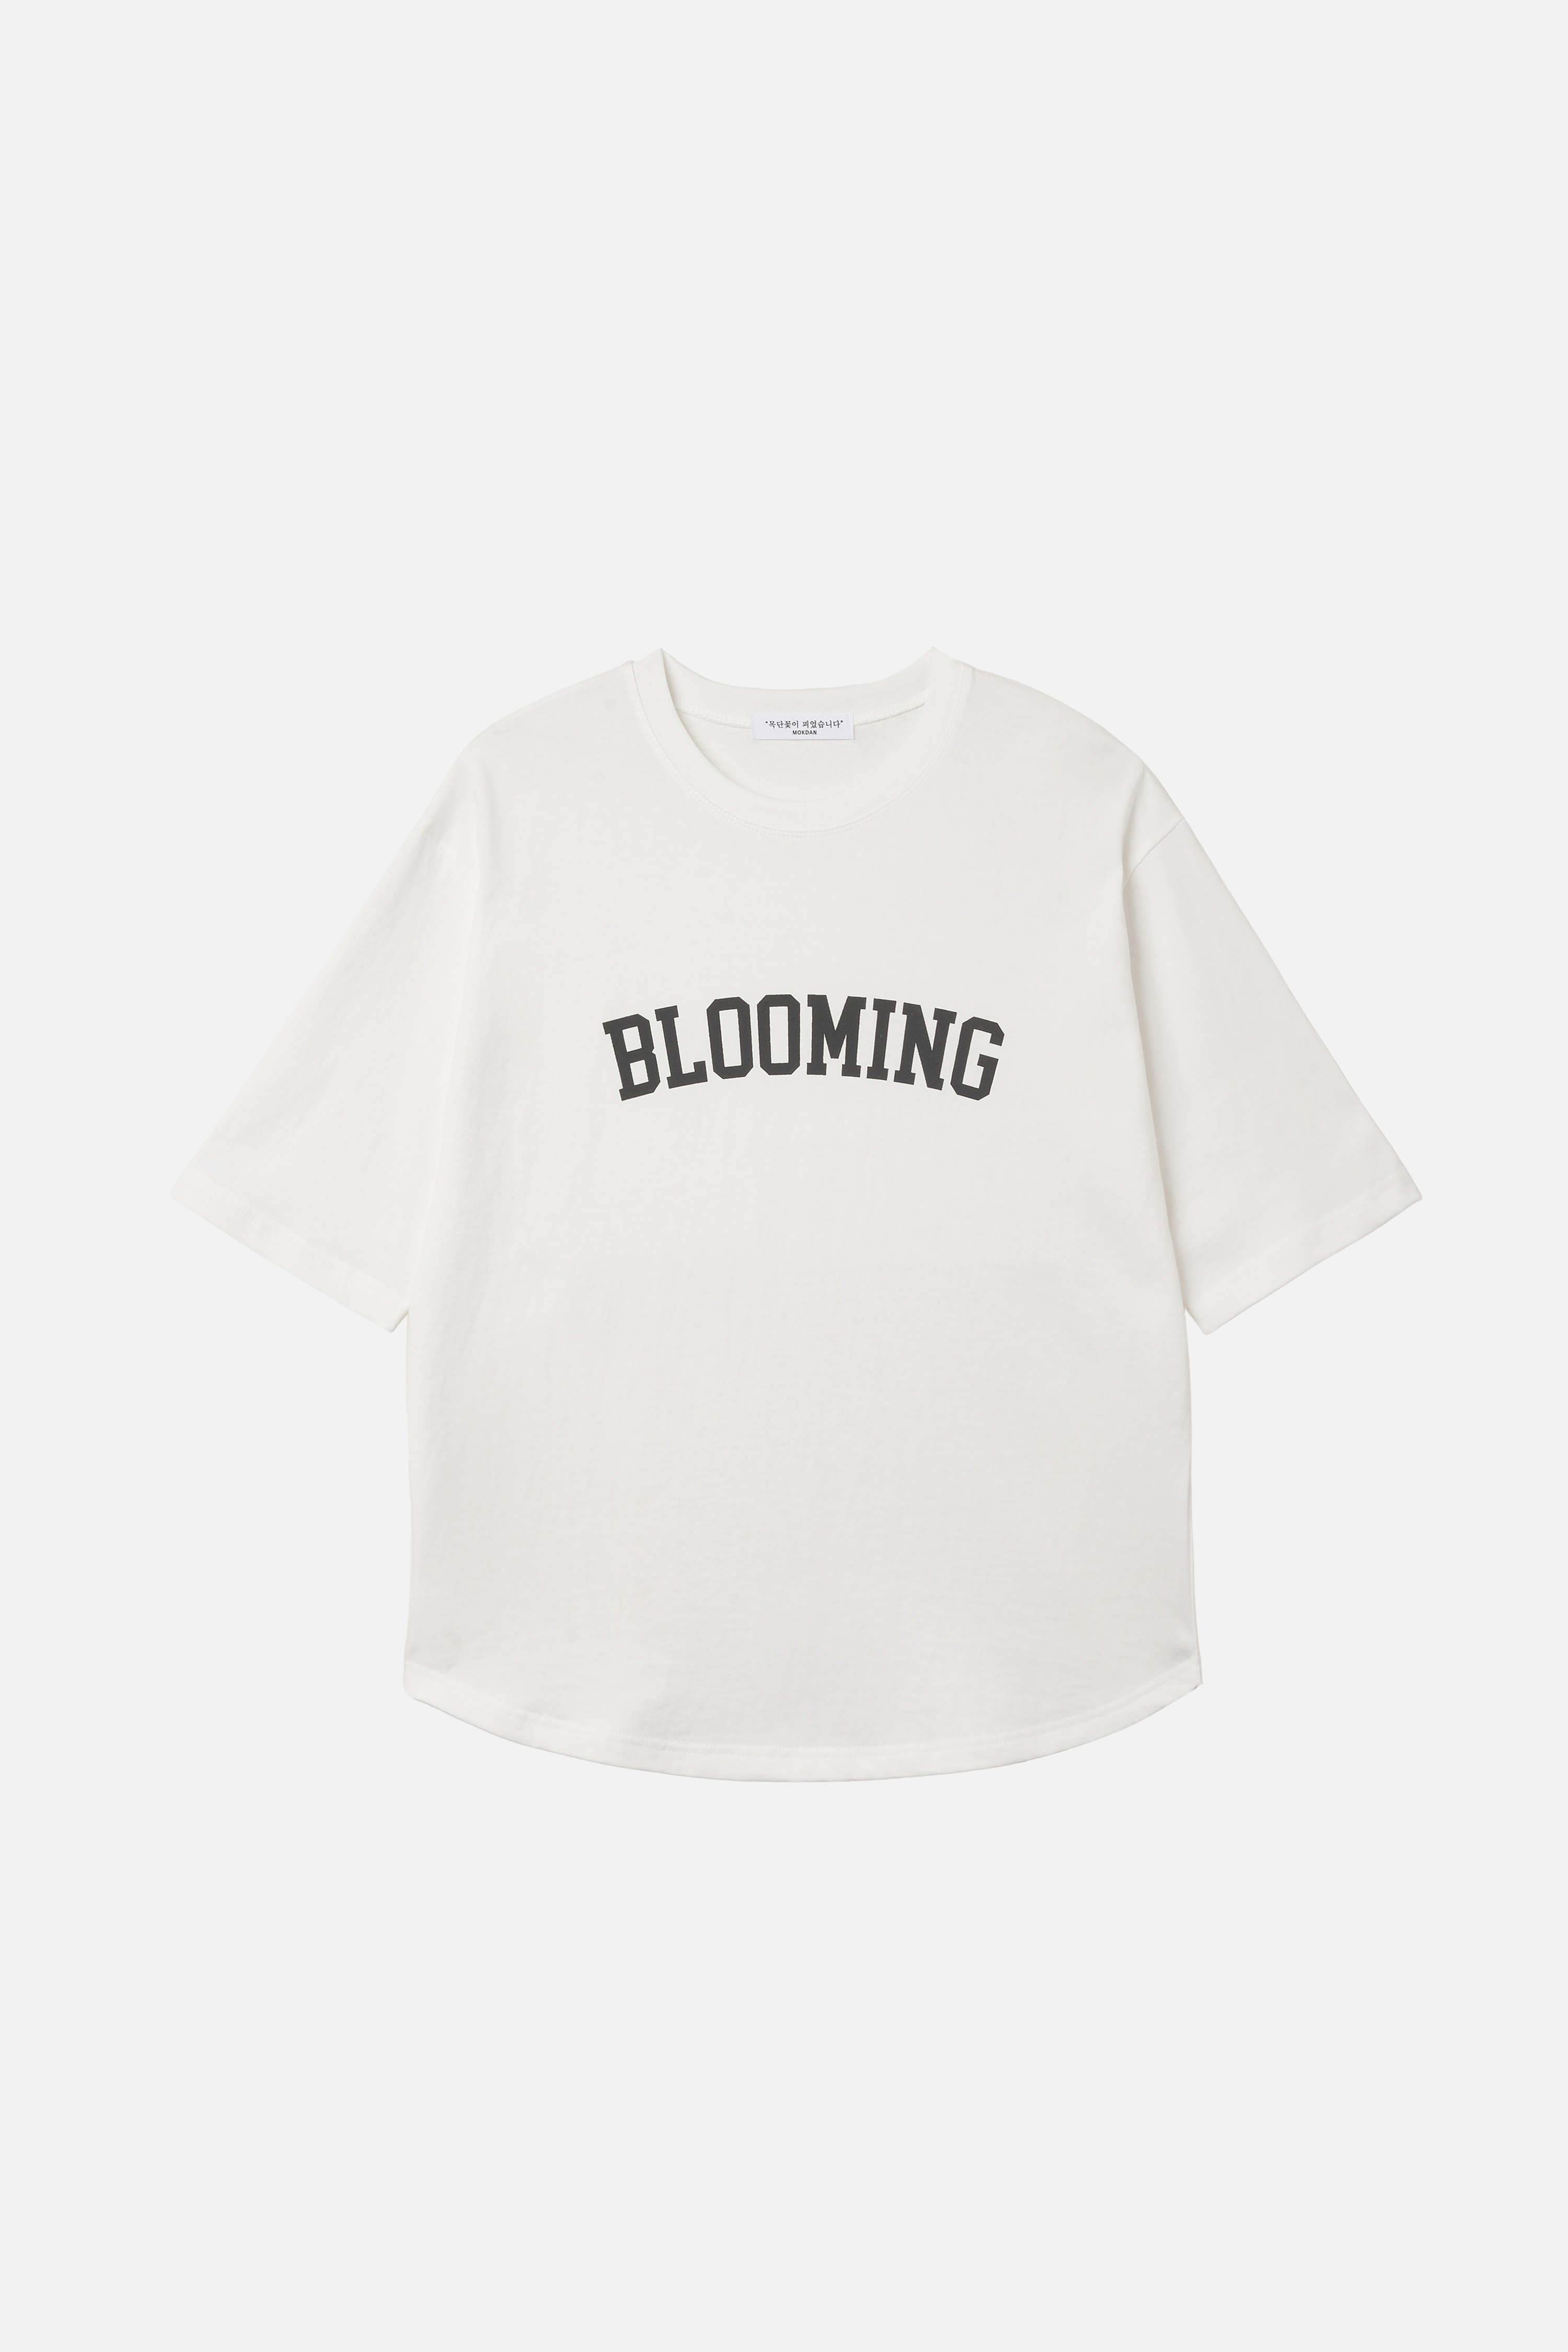 [MOKDAN] 블루밍 레터링 티셔츠